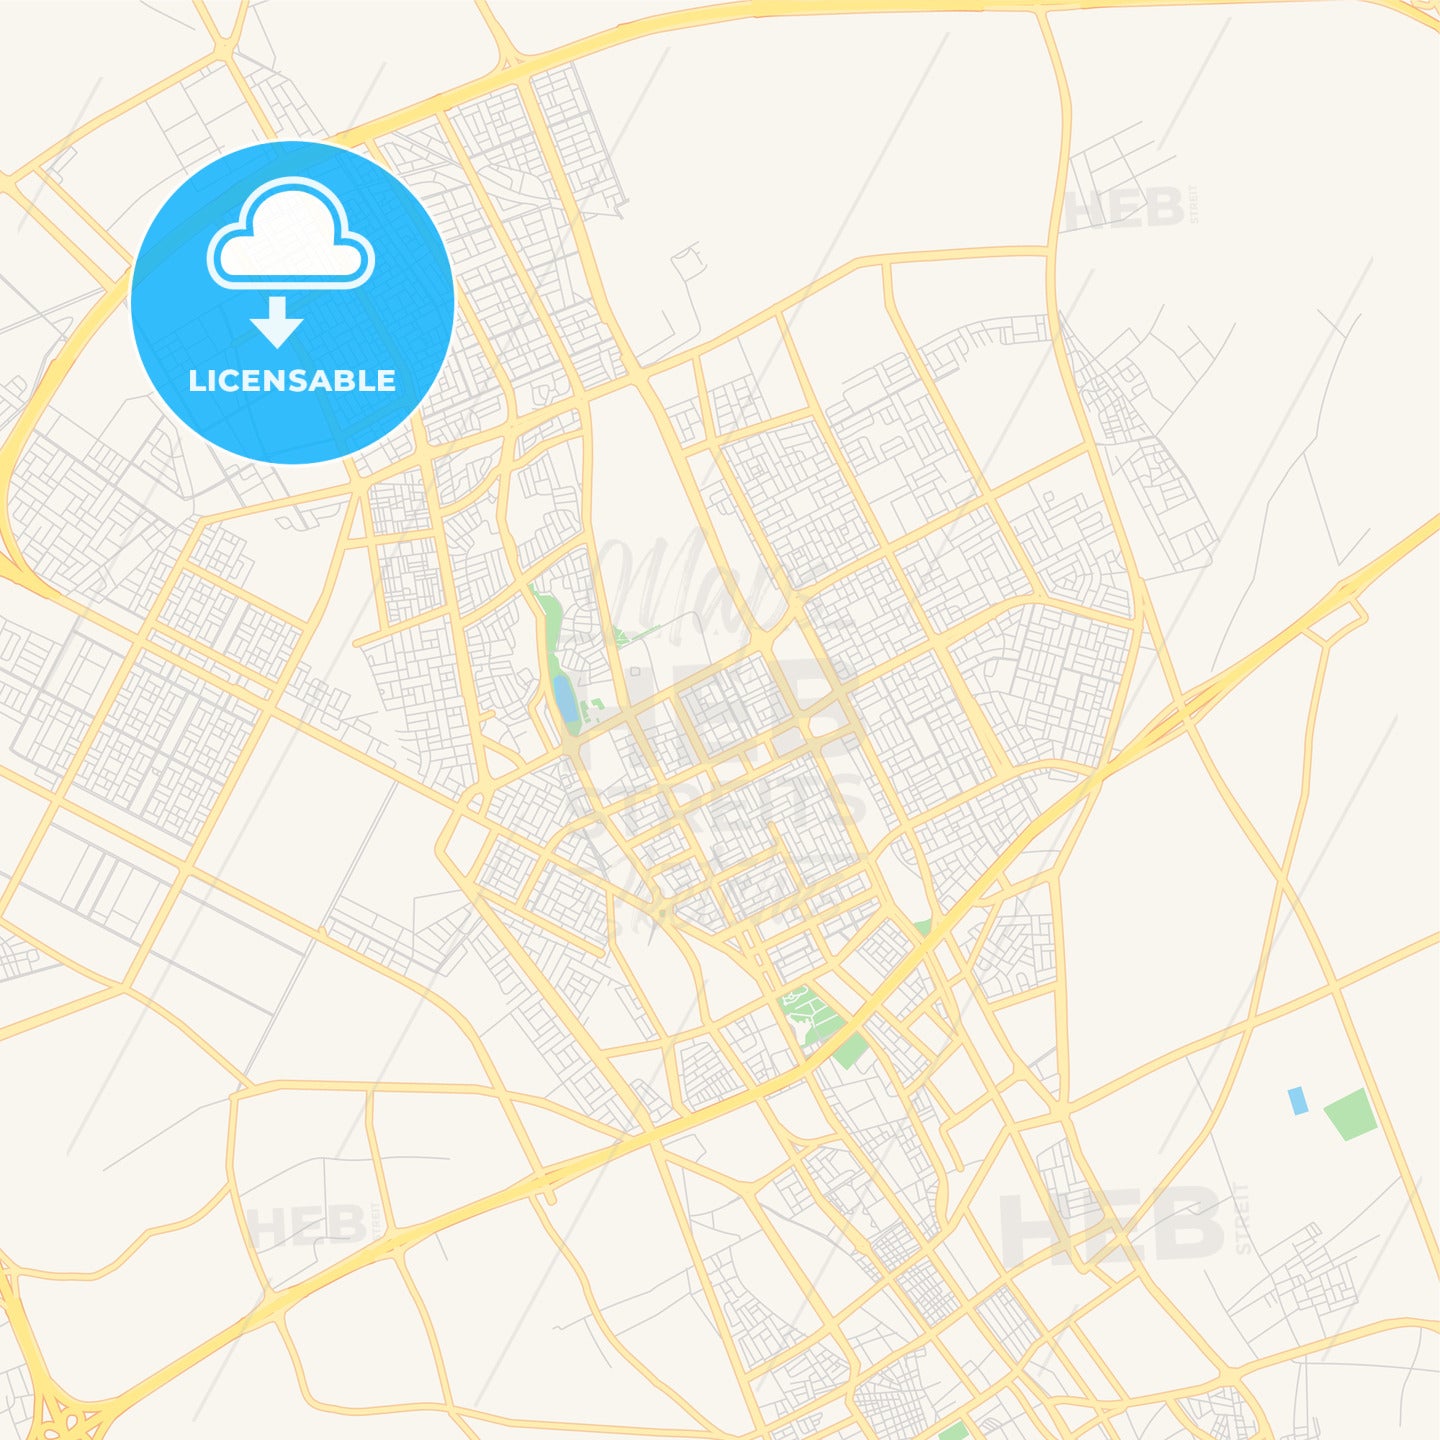 Printable street map of Buraydah, Saudi Arabia